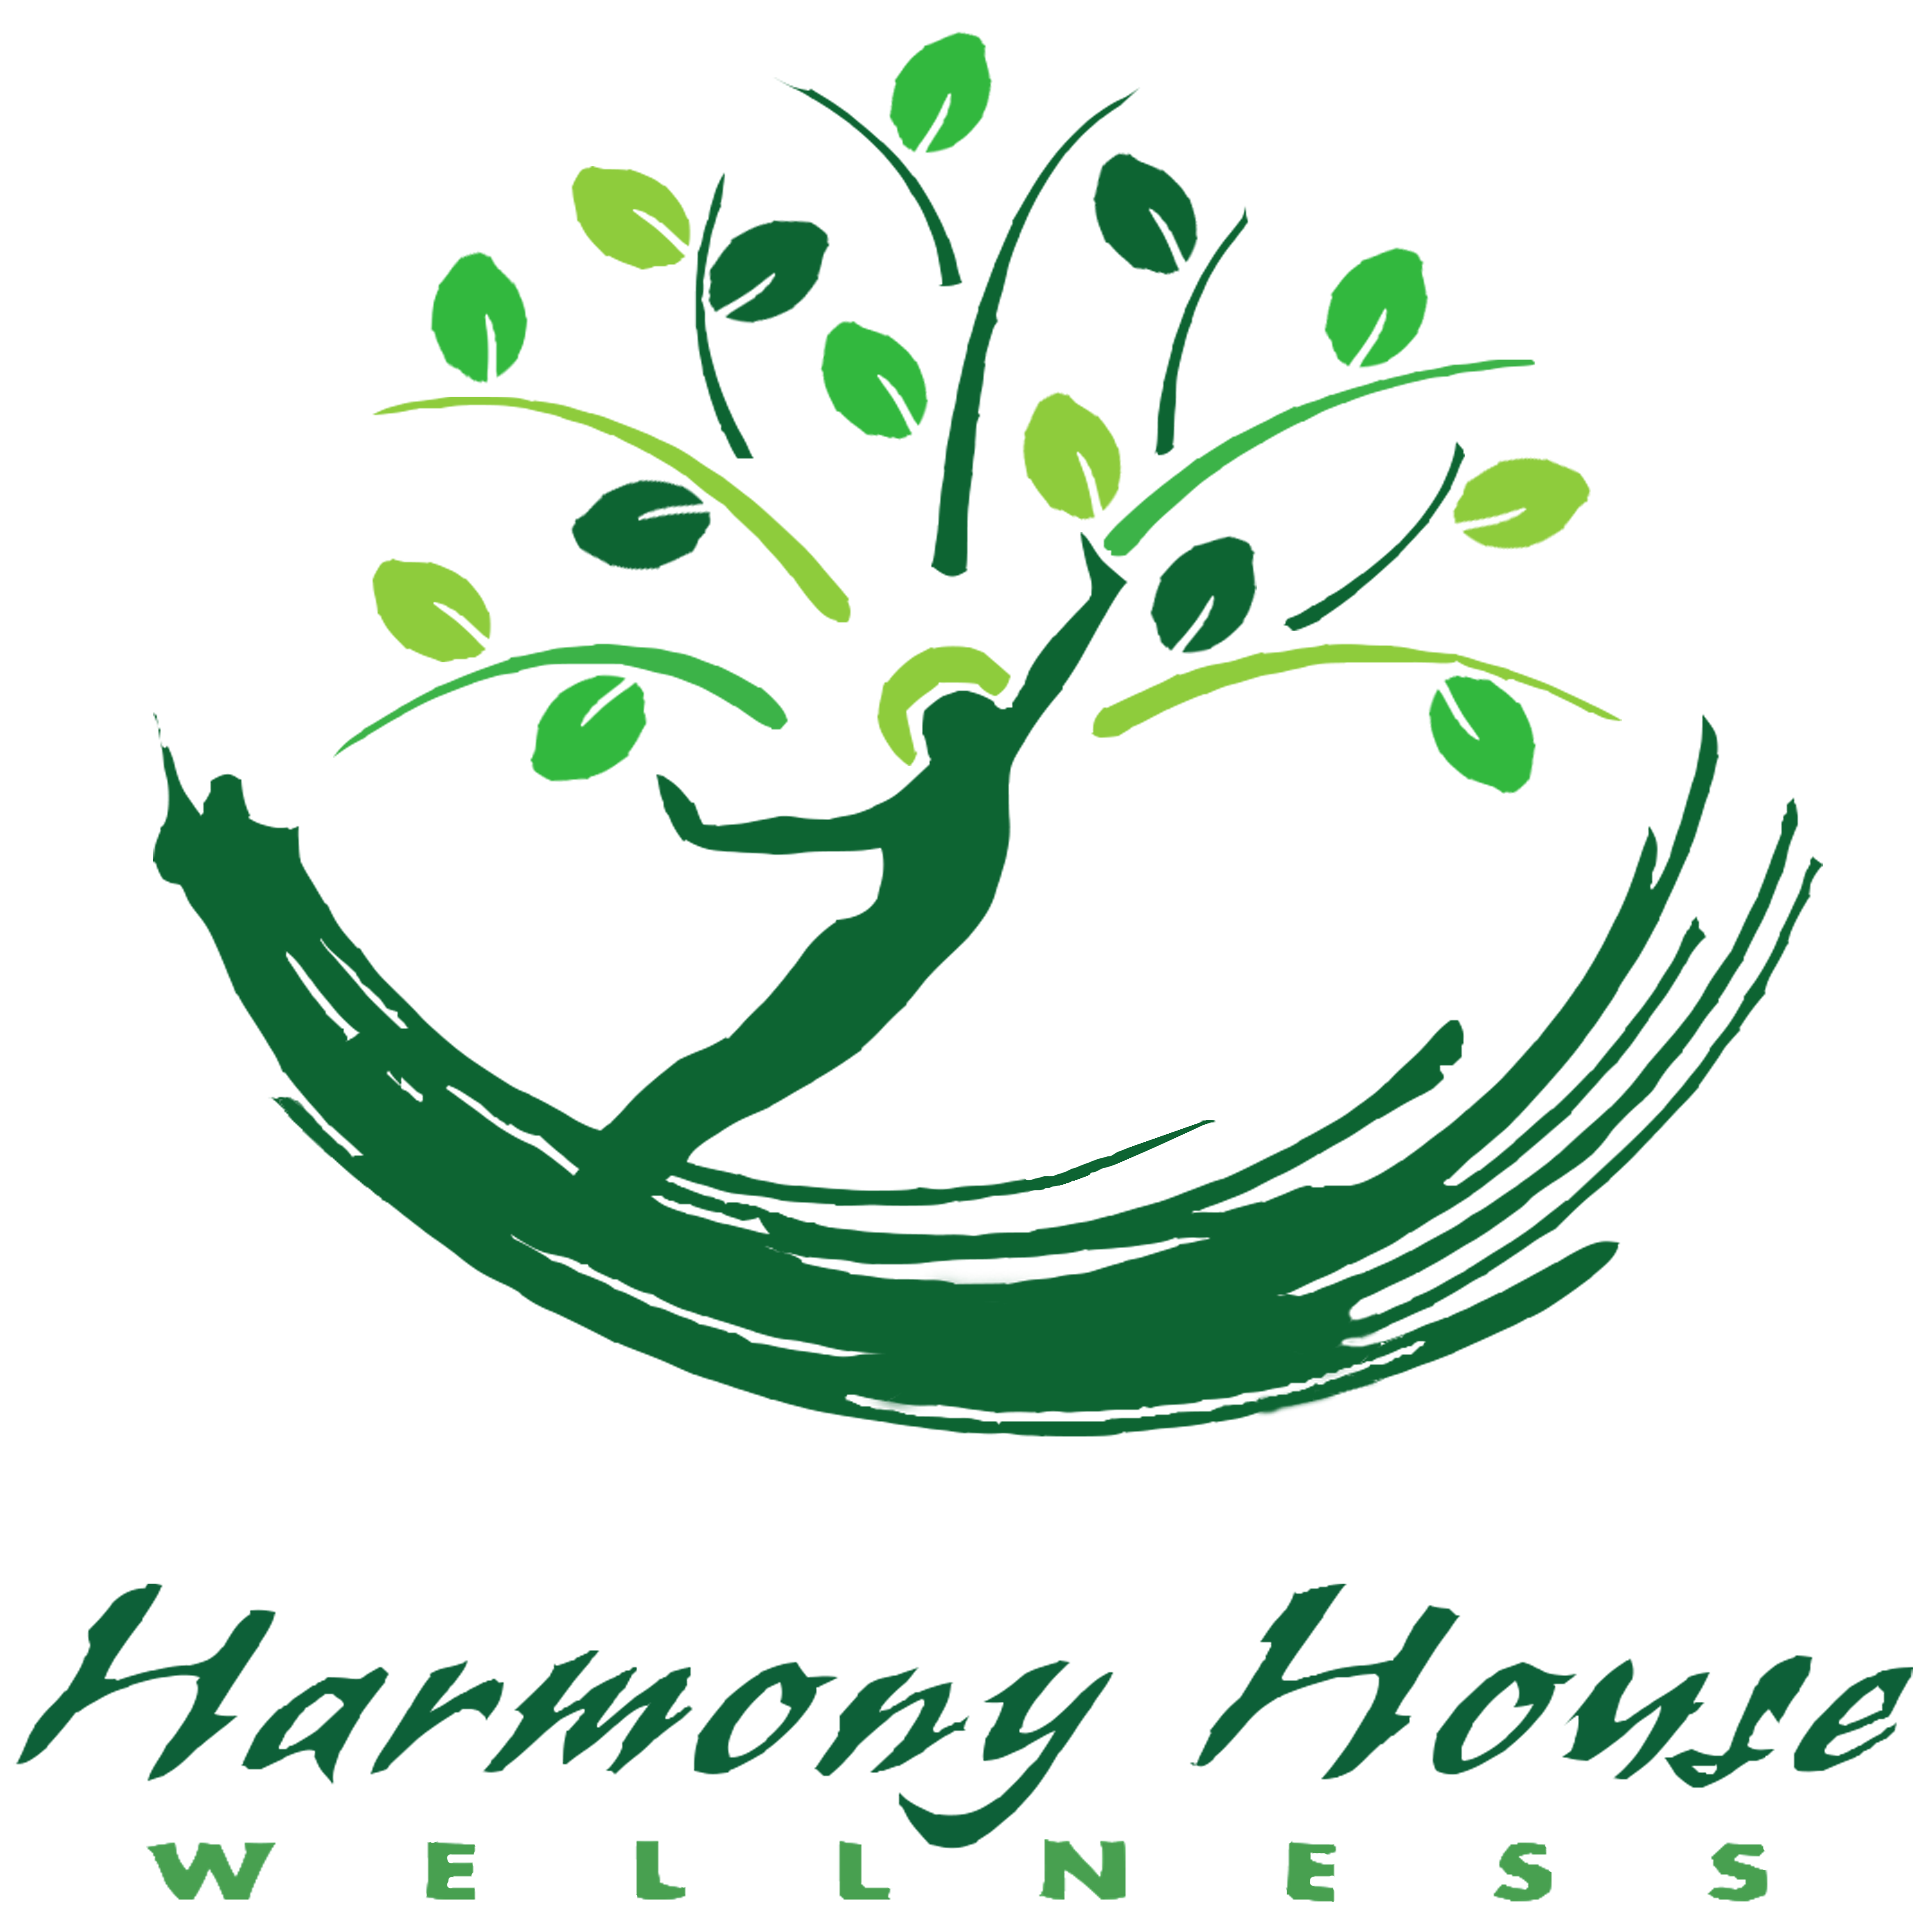 Harmony House Wellness